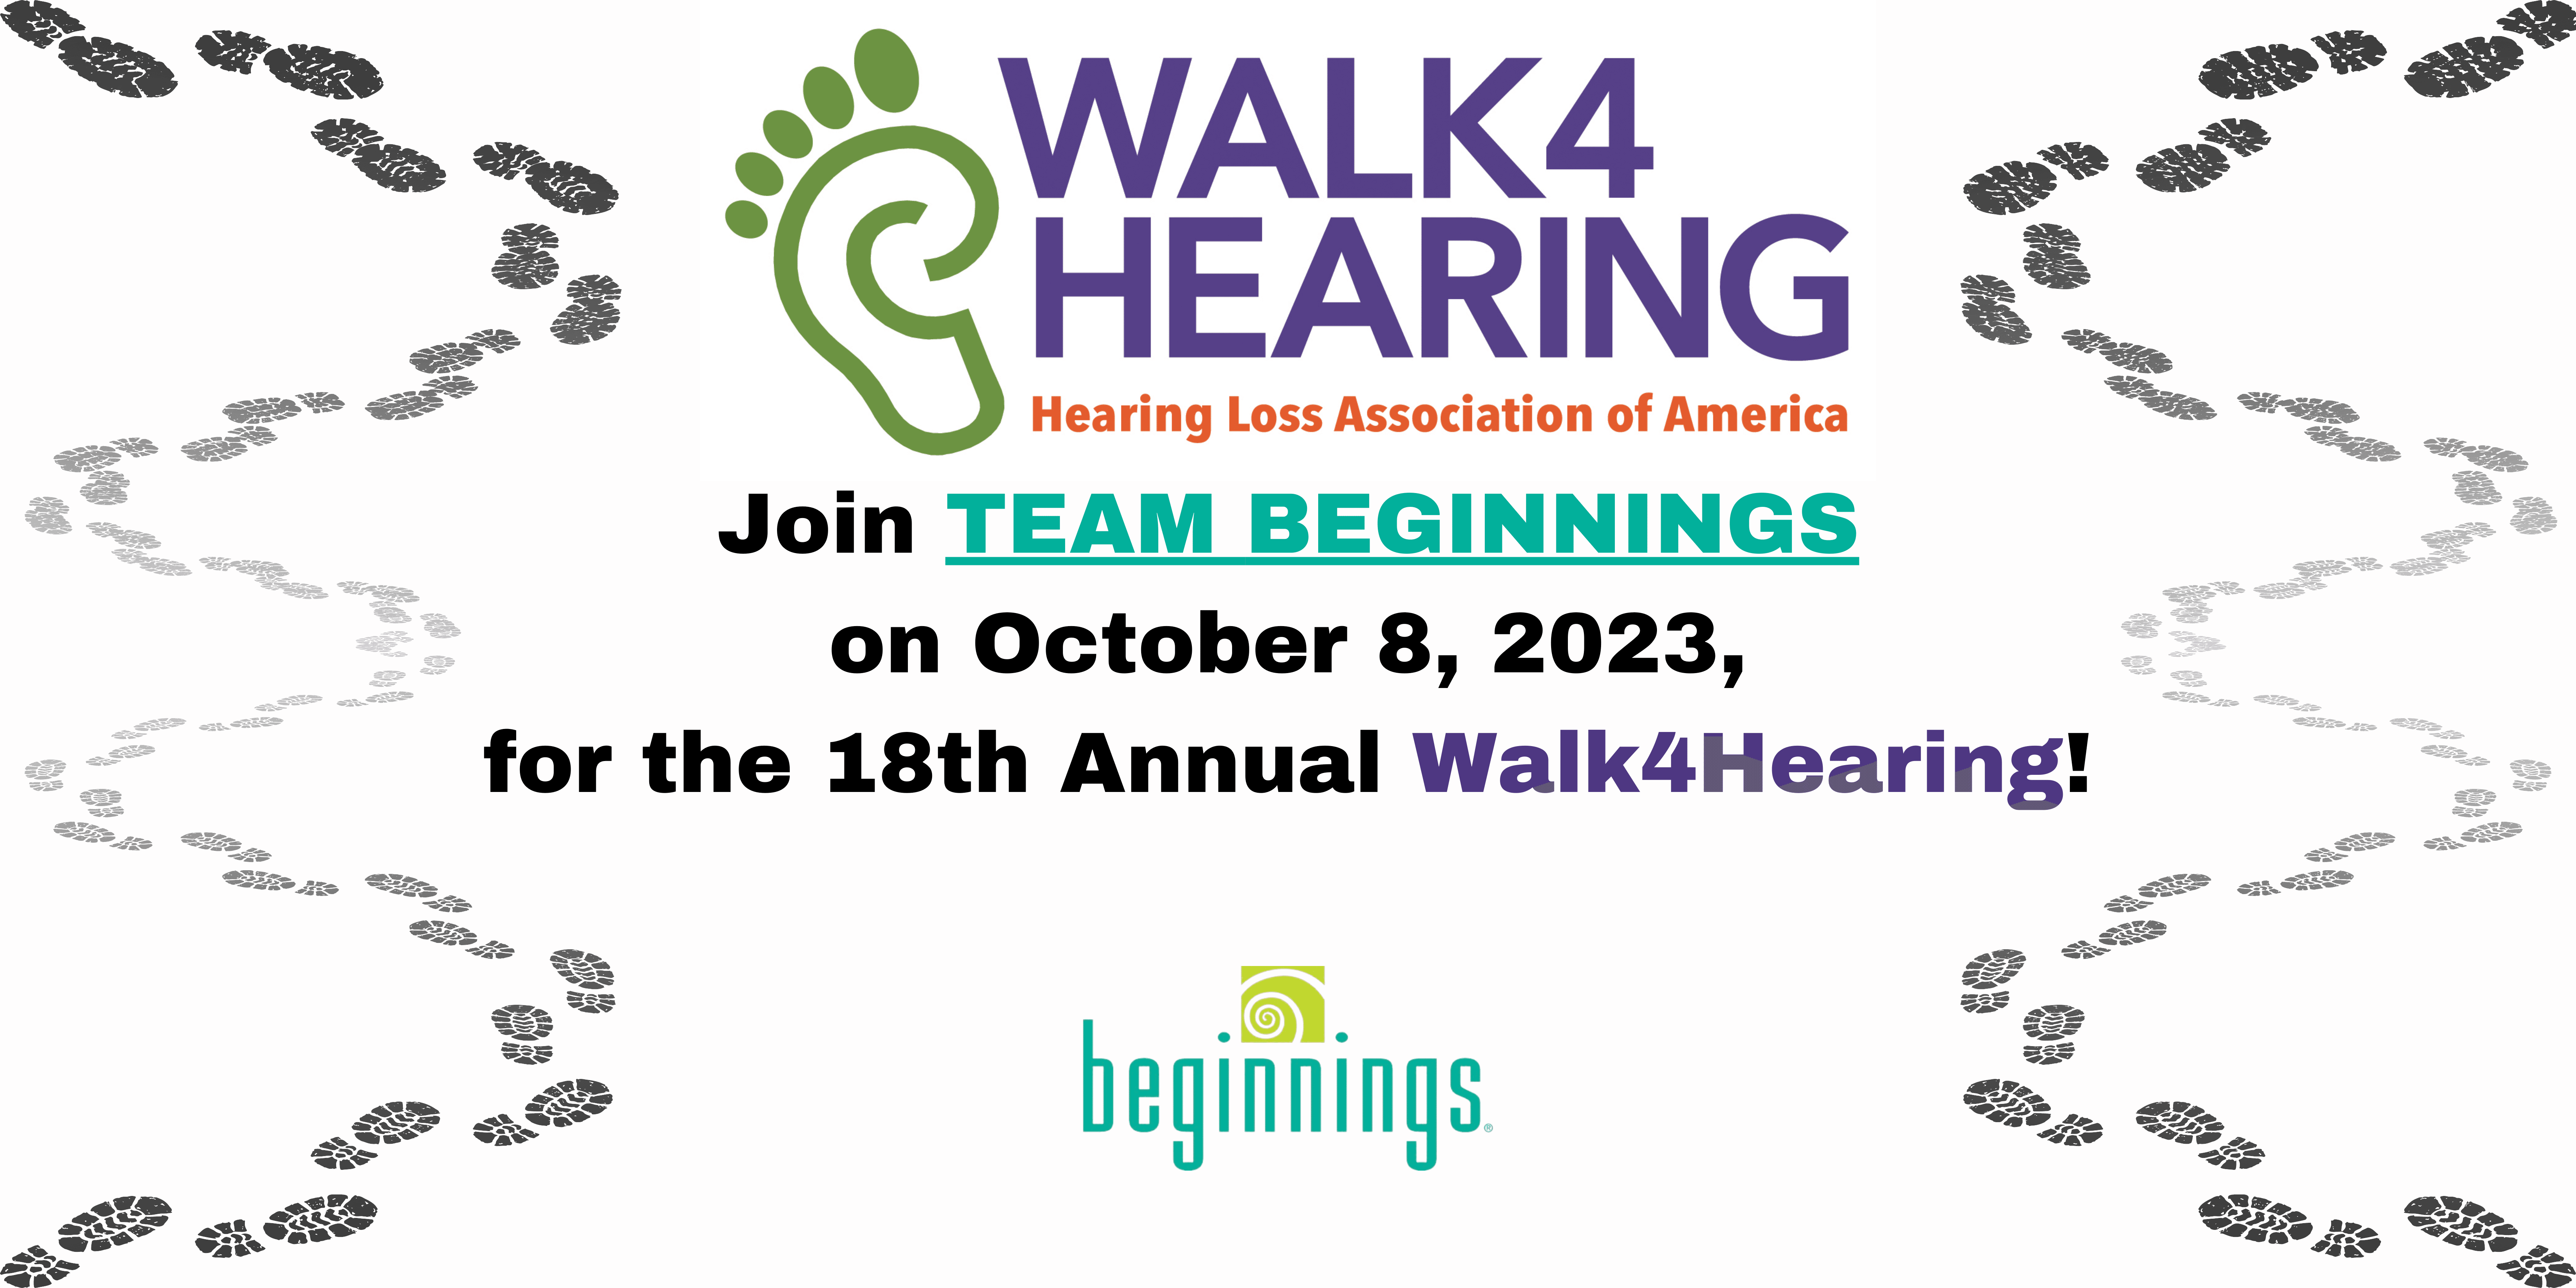 Walk4Hearing-Team BEGINNINGS 2023